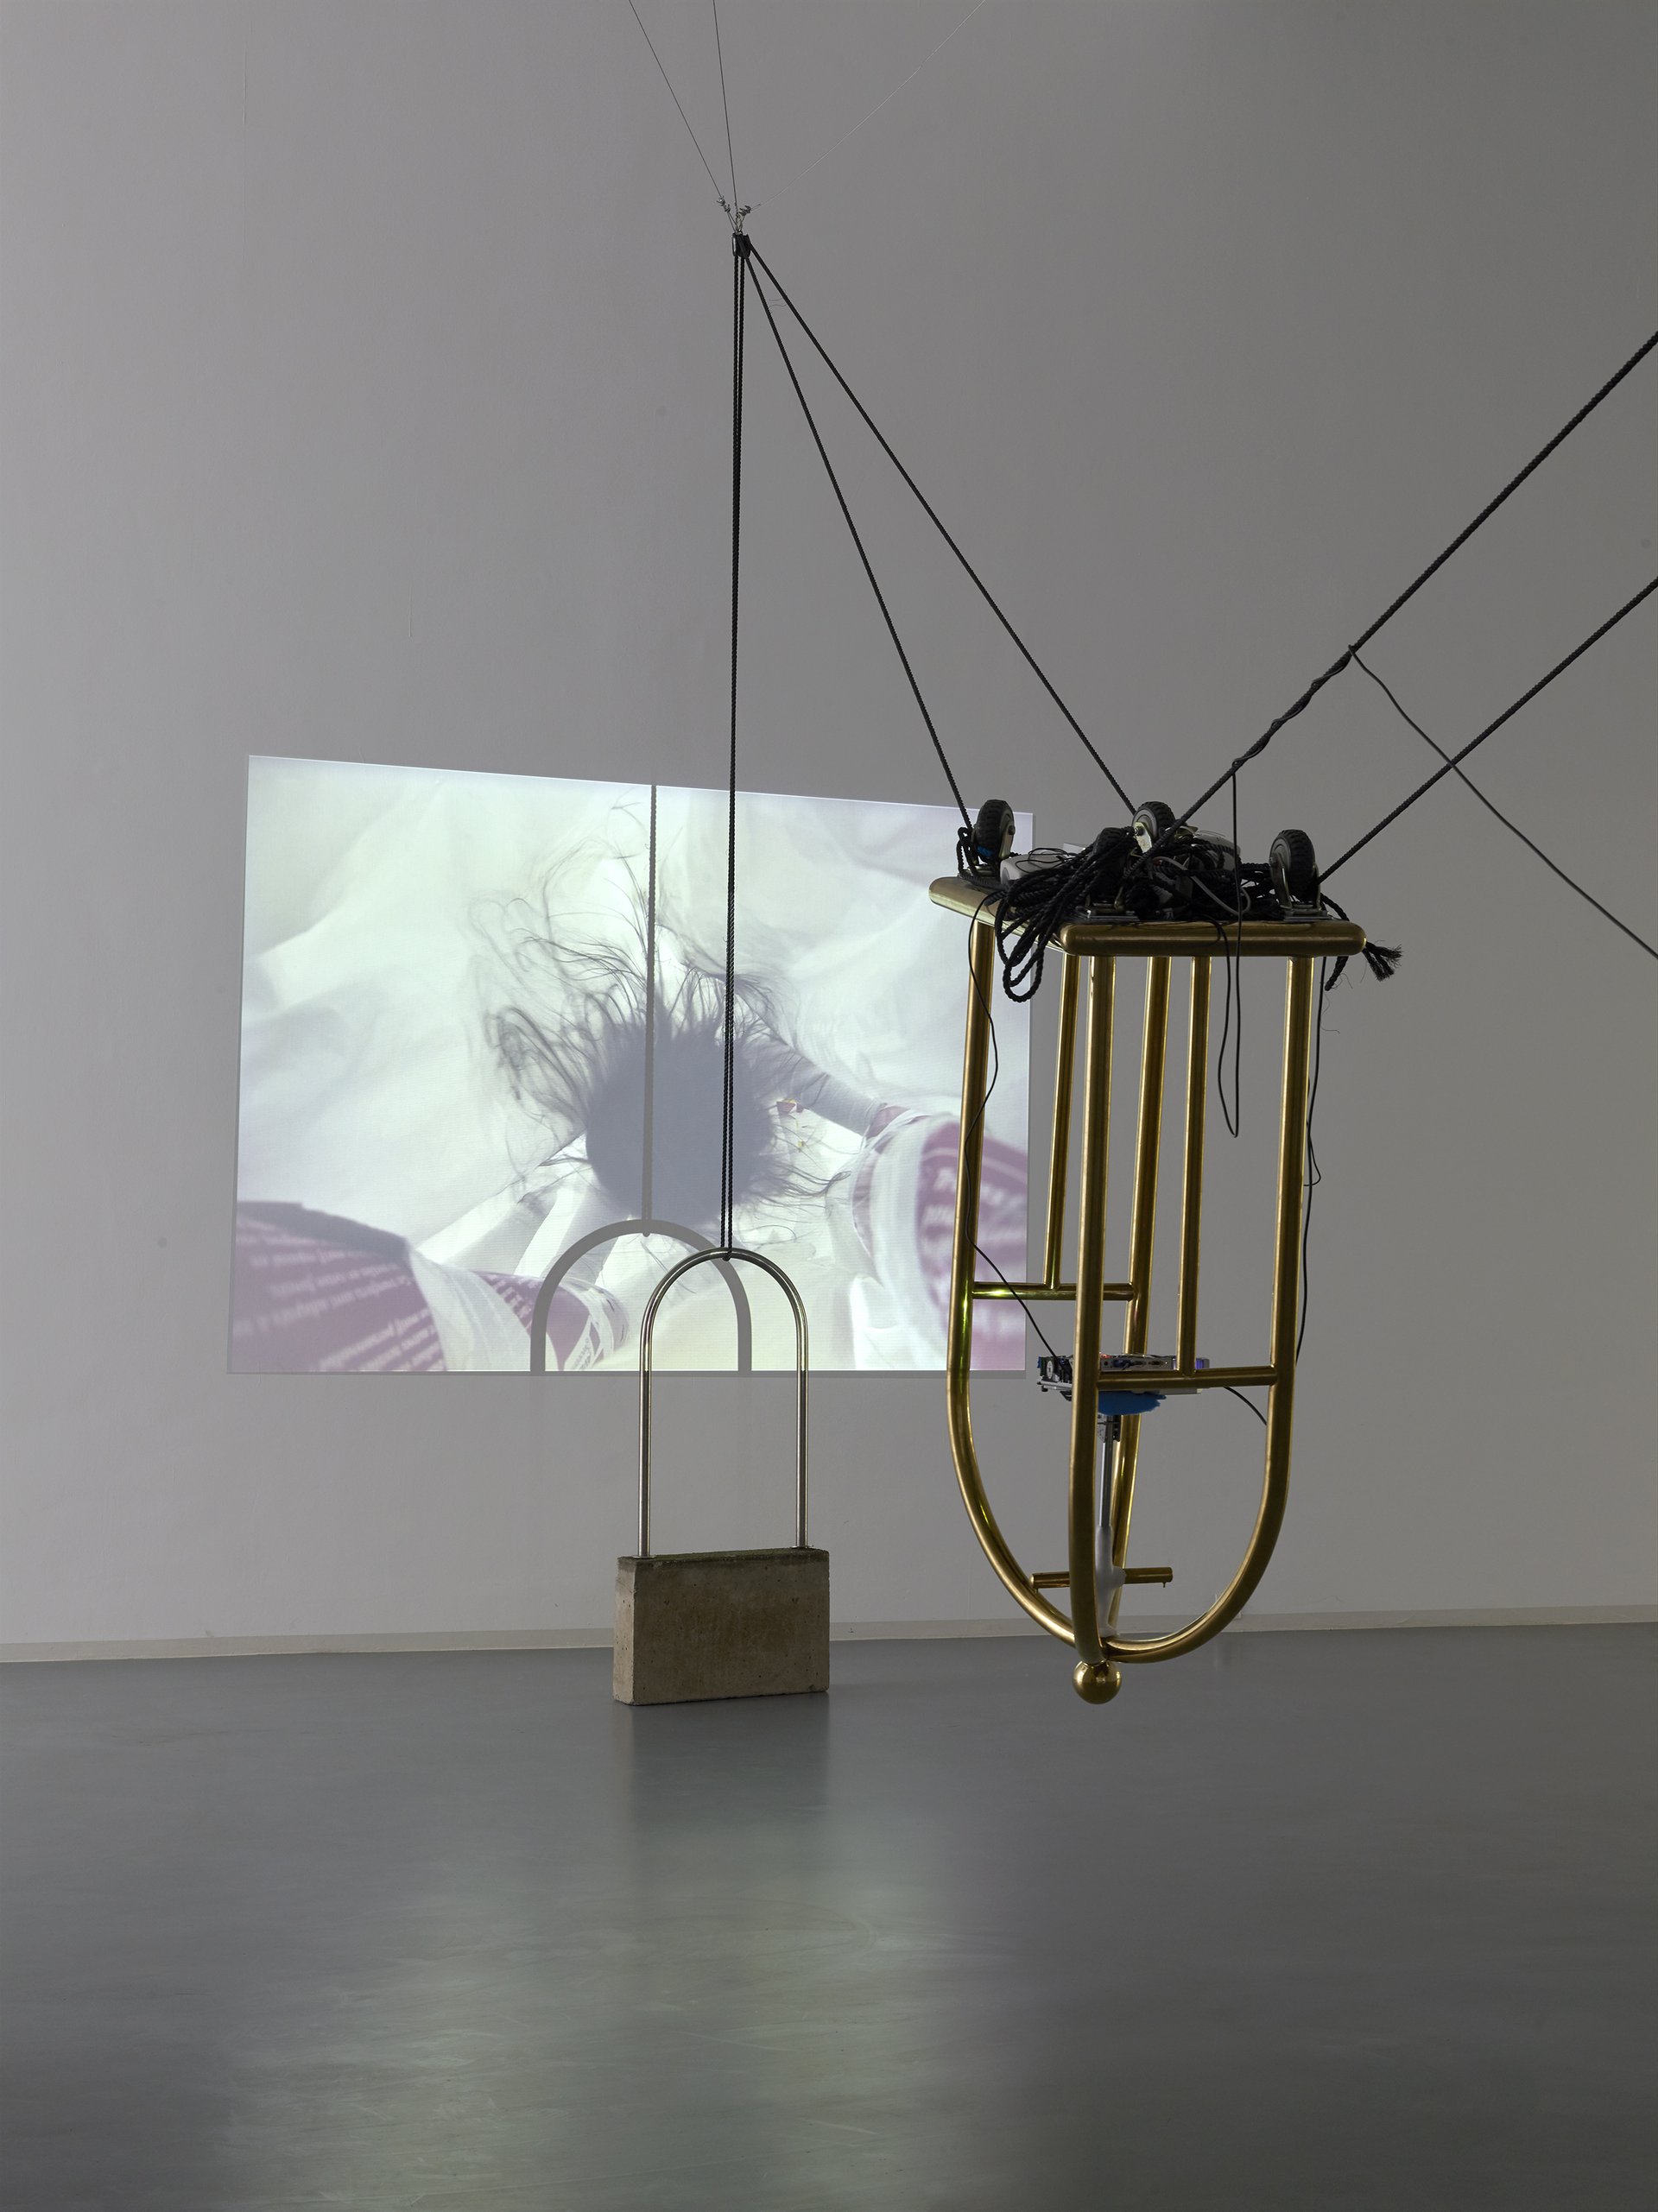 Raphaela Vogel, Untitled, 2015, installation view, 2015, Bonner Kunstverein, Courtesy of the artist and BQ, Berlin. Photo: Simon Vogel